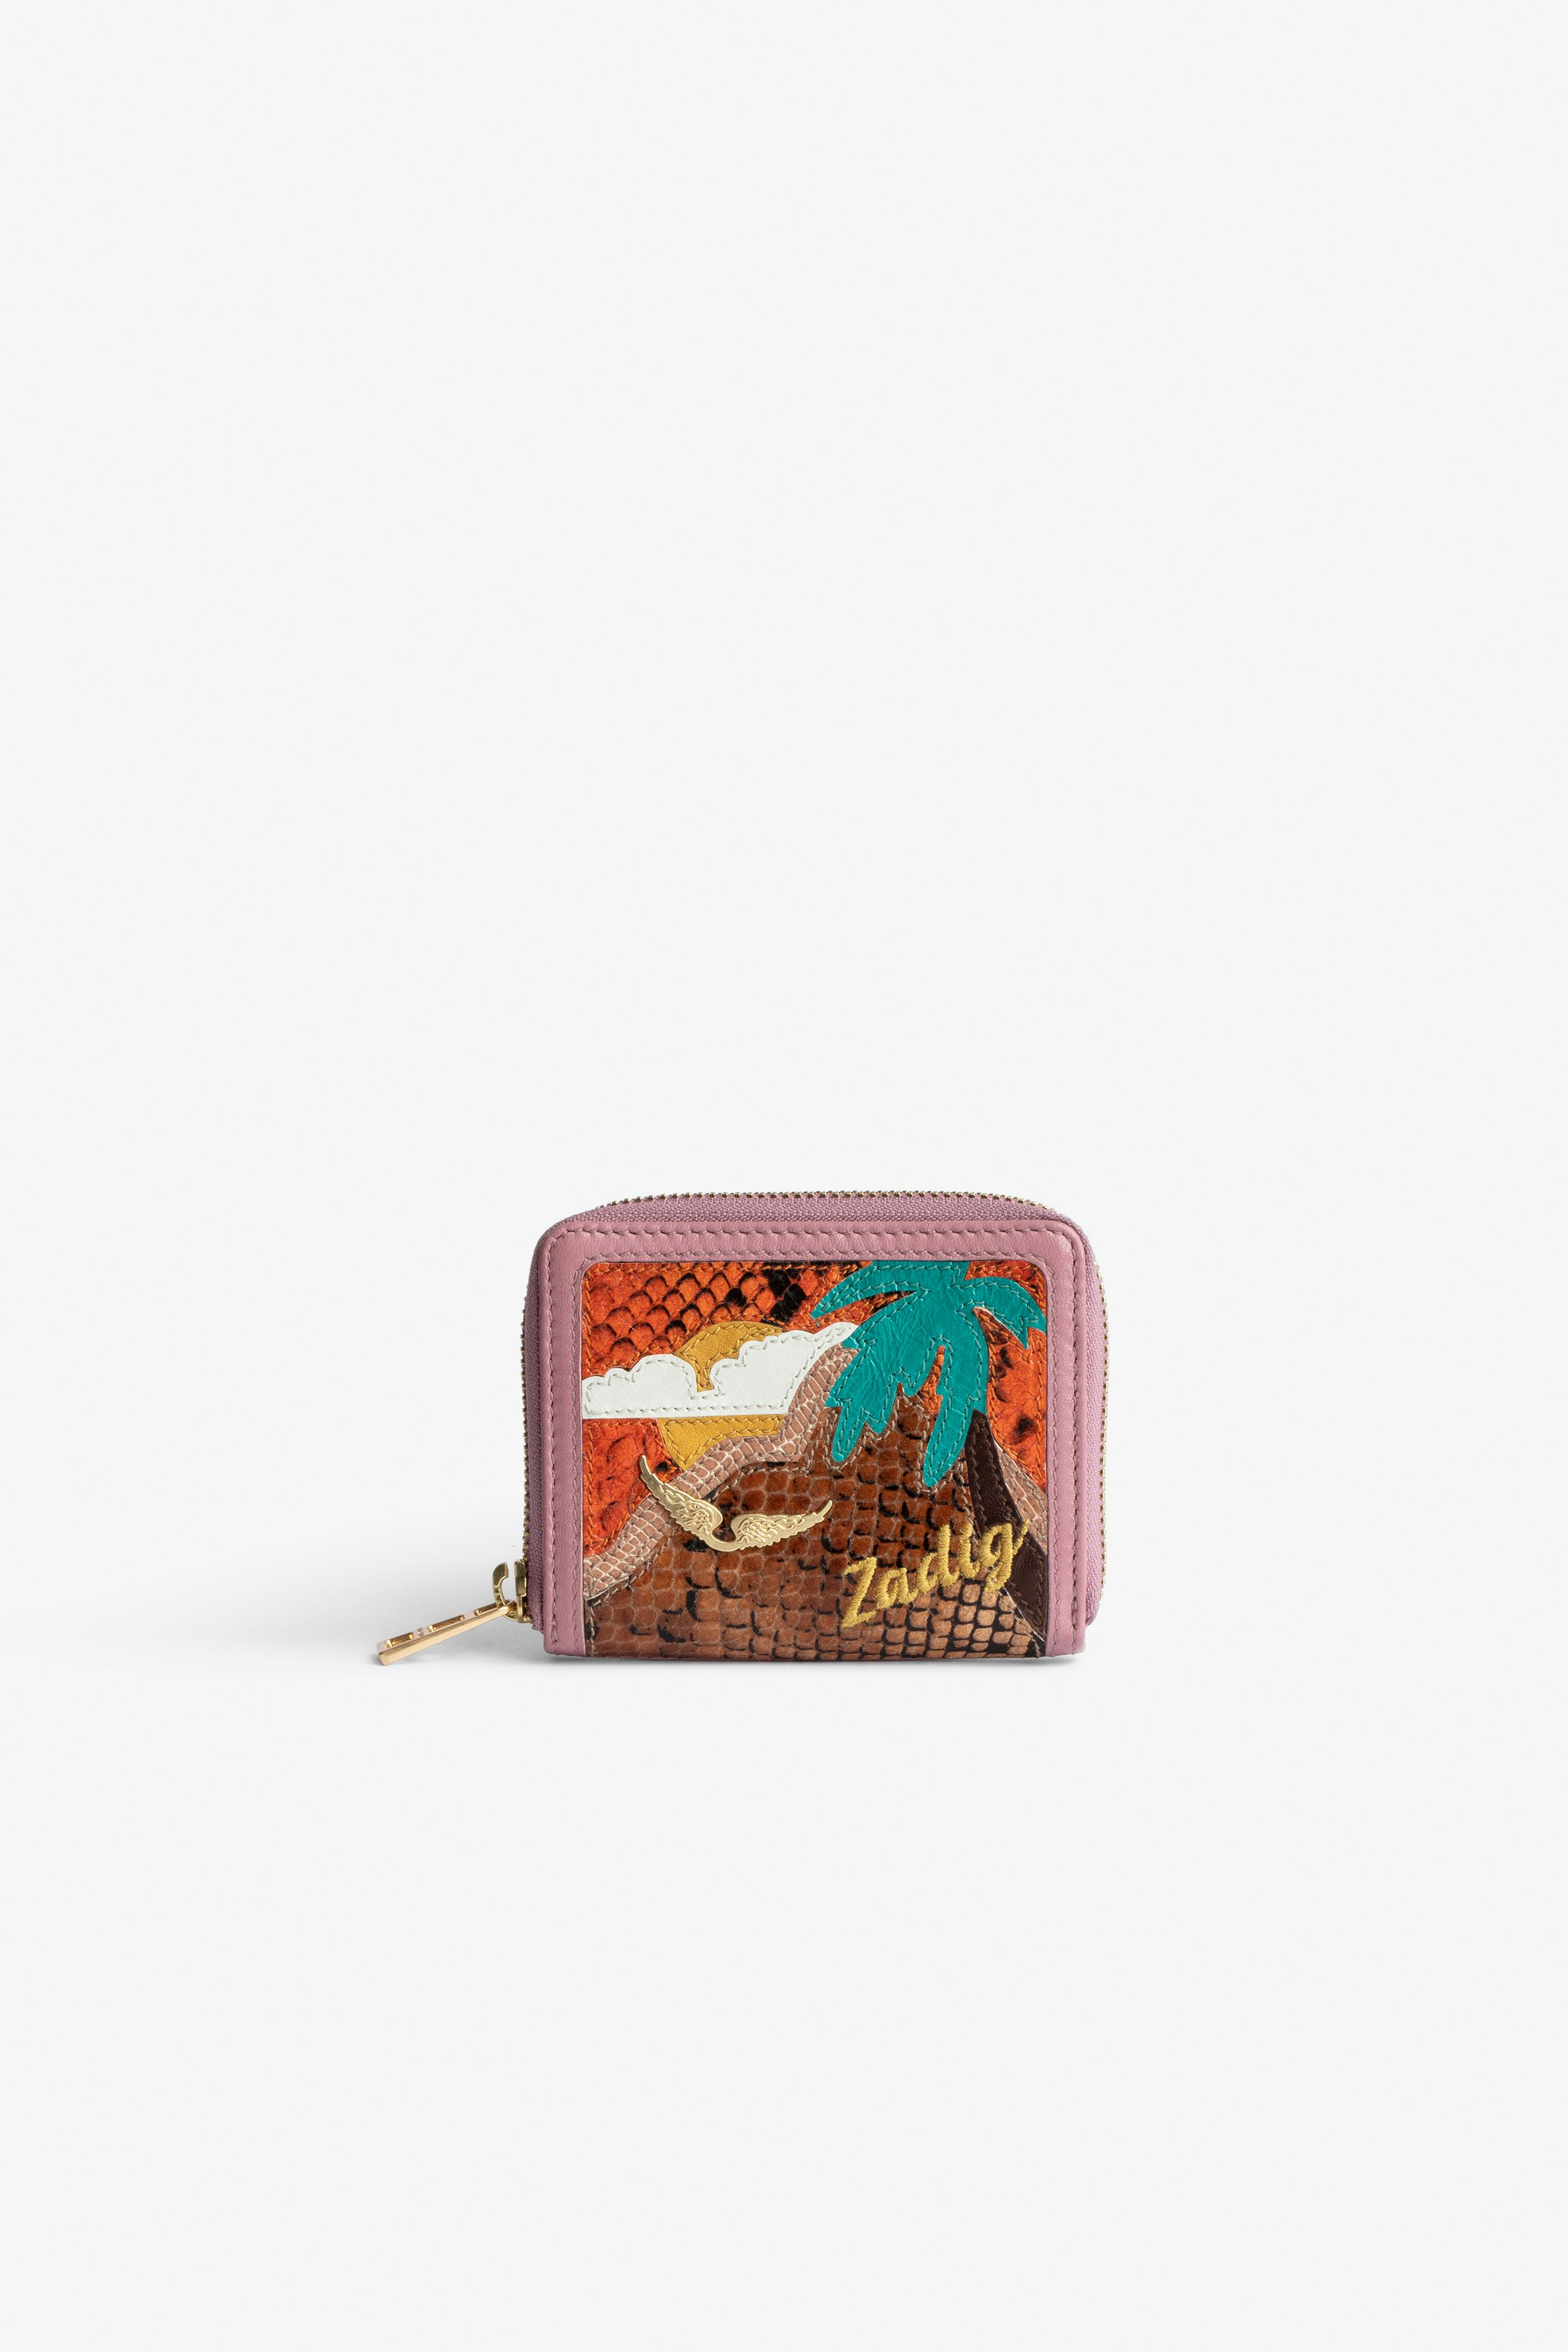 Mini ZV Wallet Women's wallet in pink leather with island motif